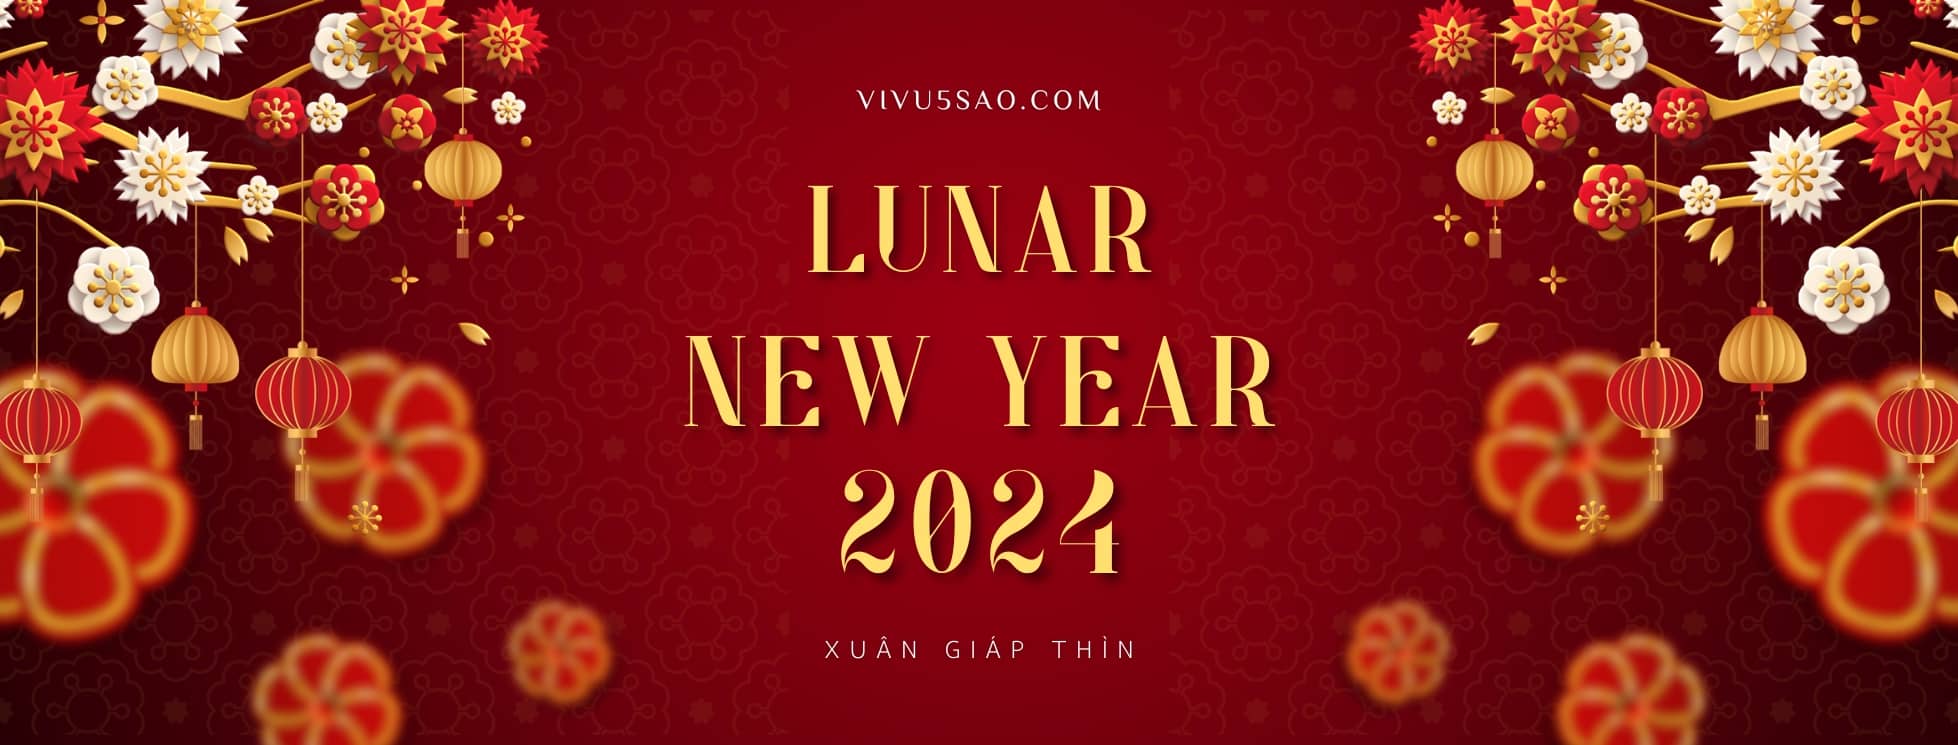 Happy New Year 2024 with Vivu5sao